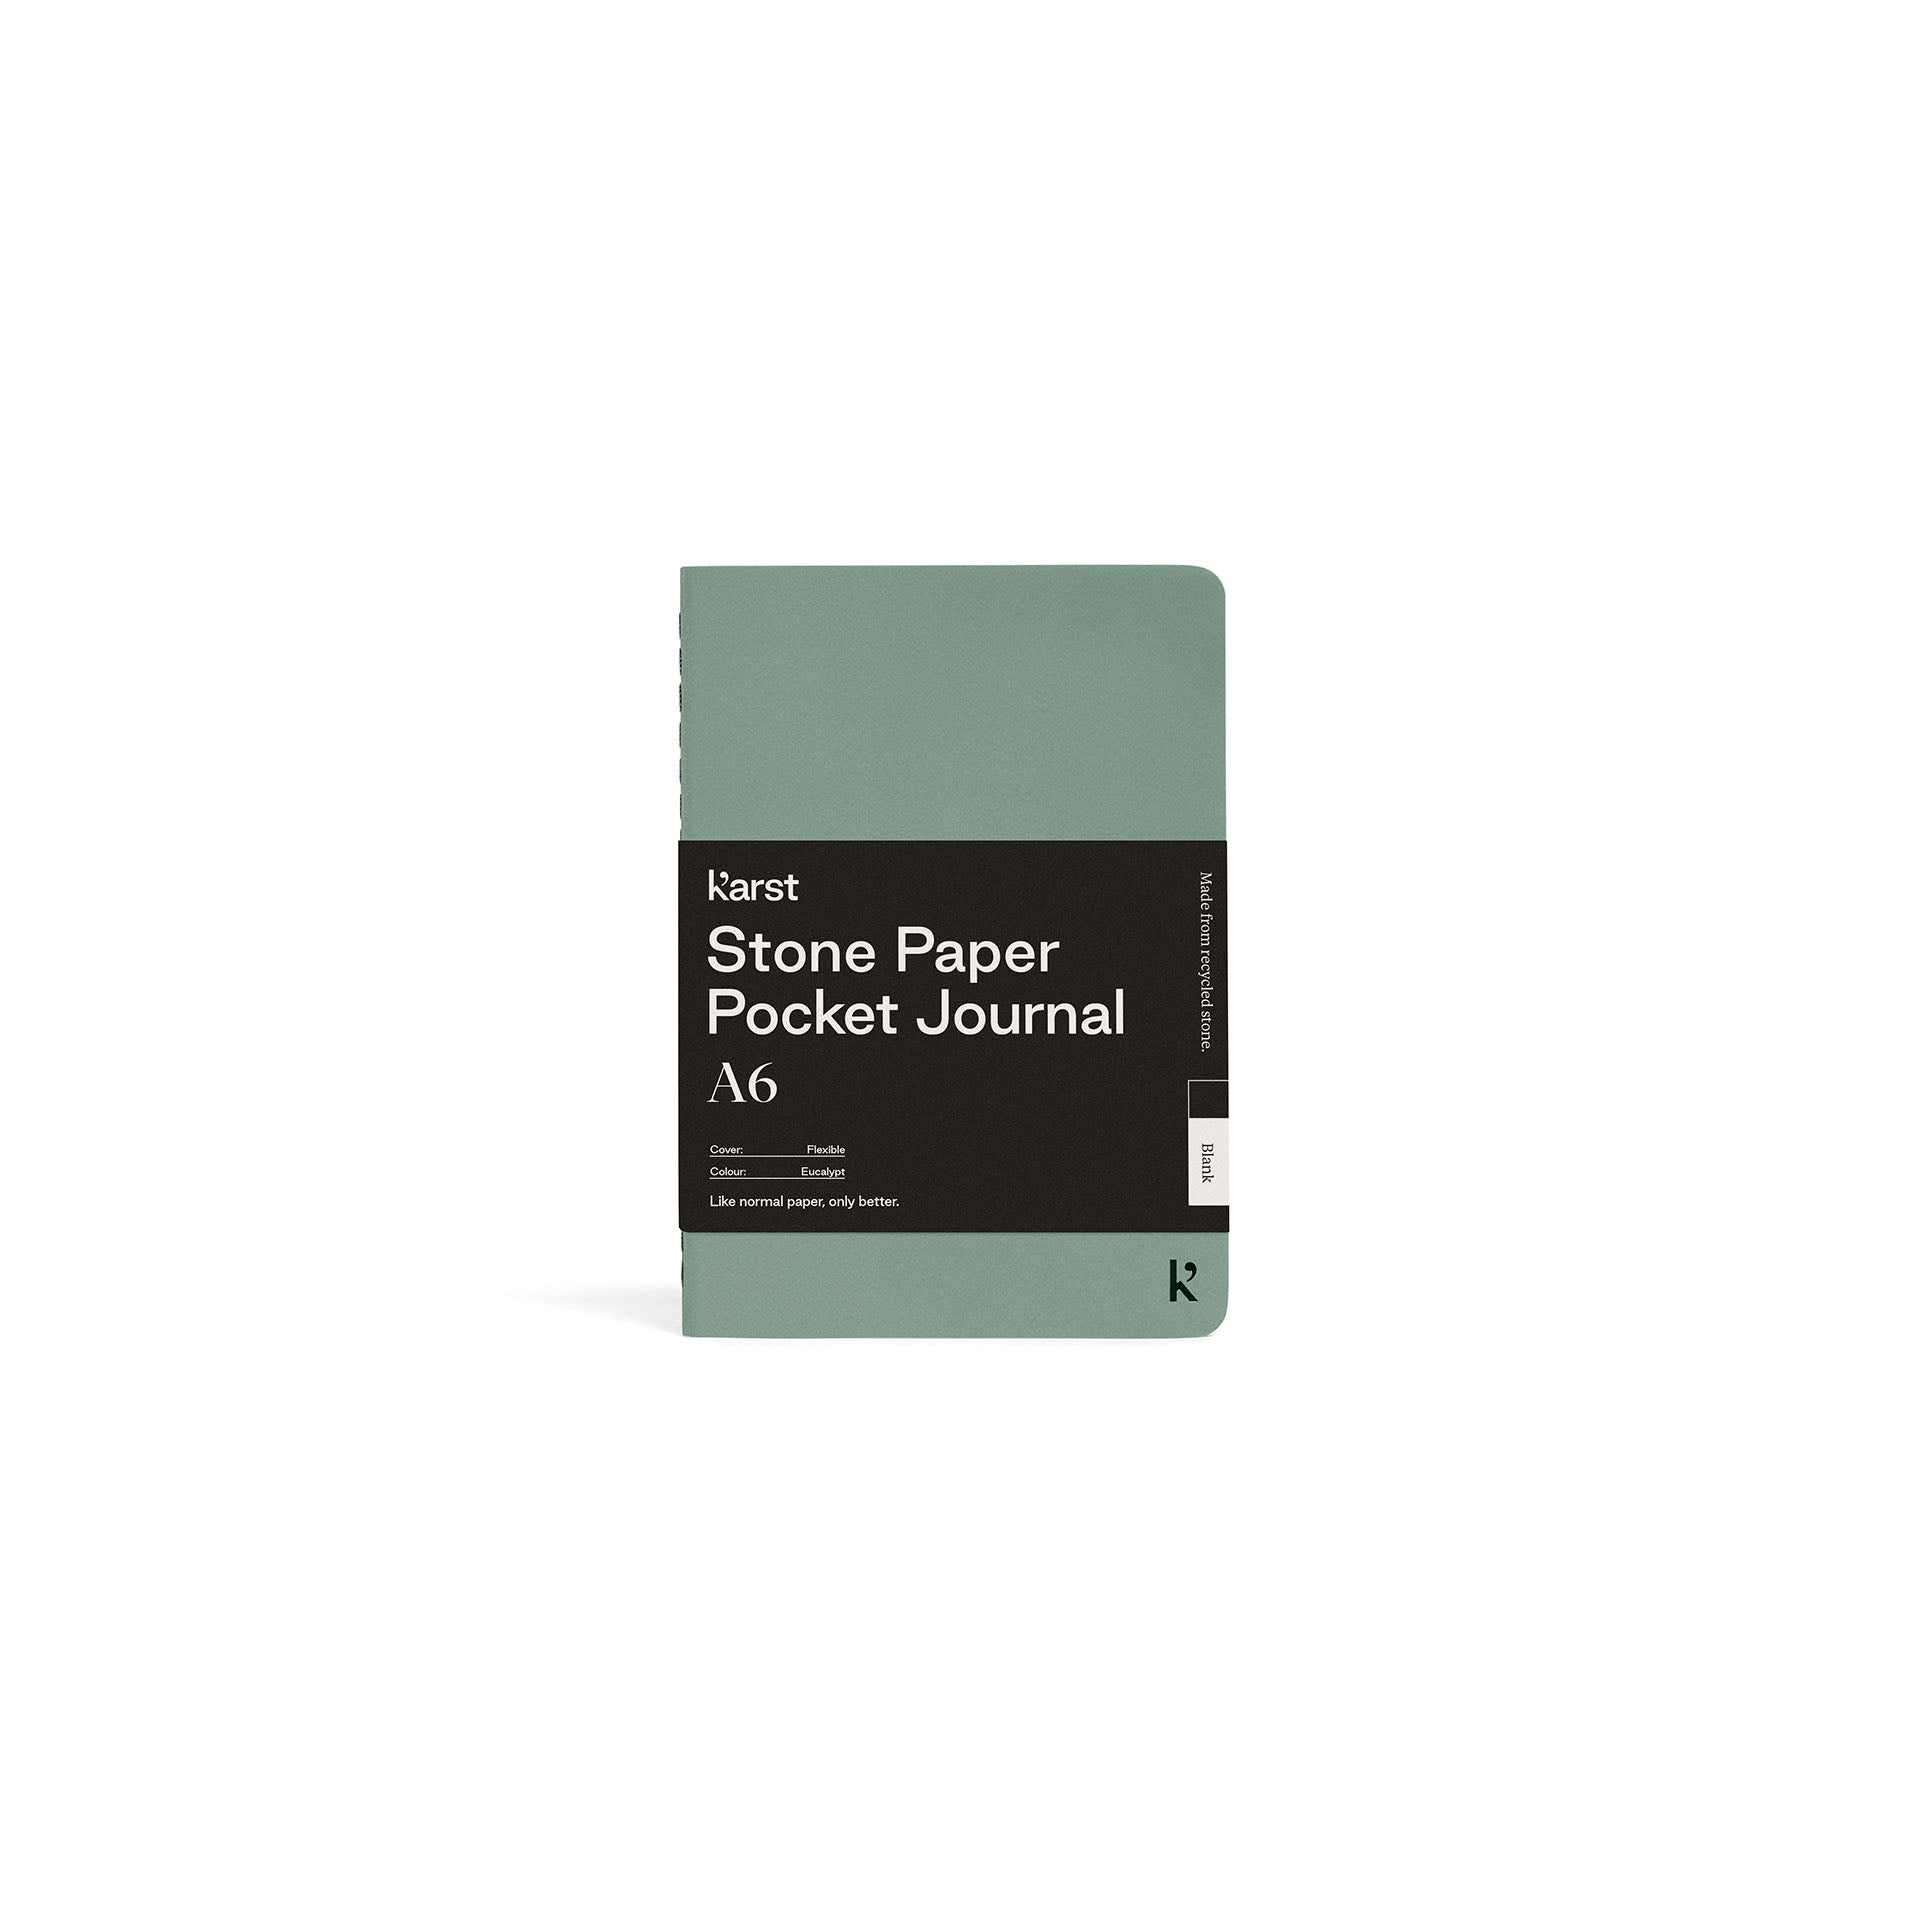 A6 stone paper pocket journals eucalyptus